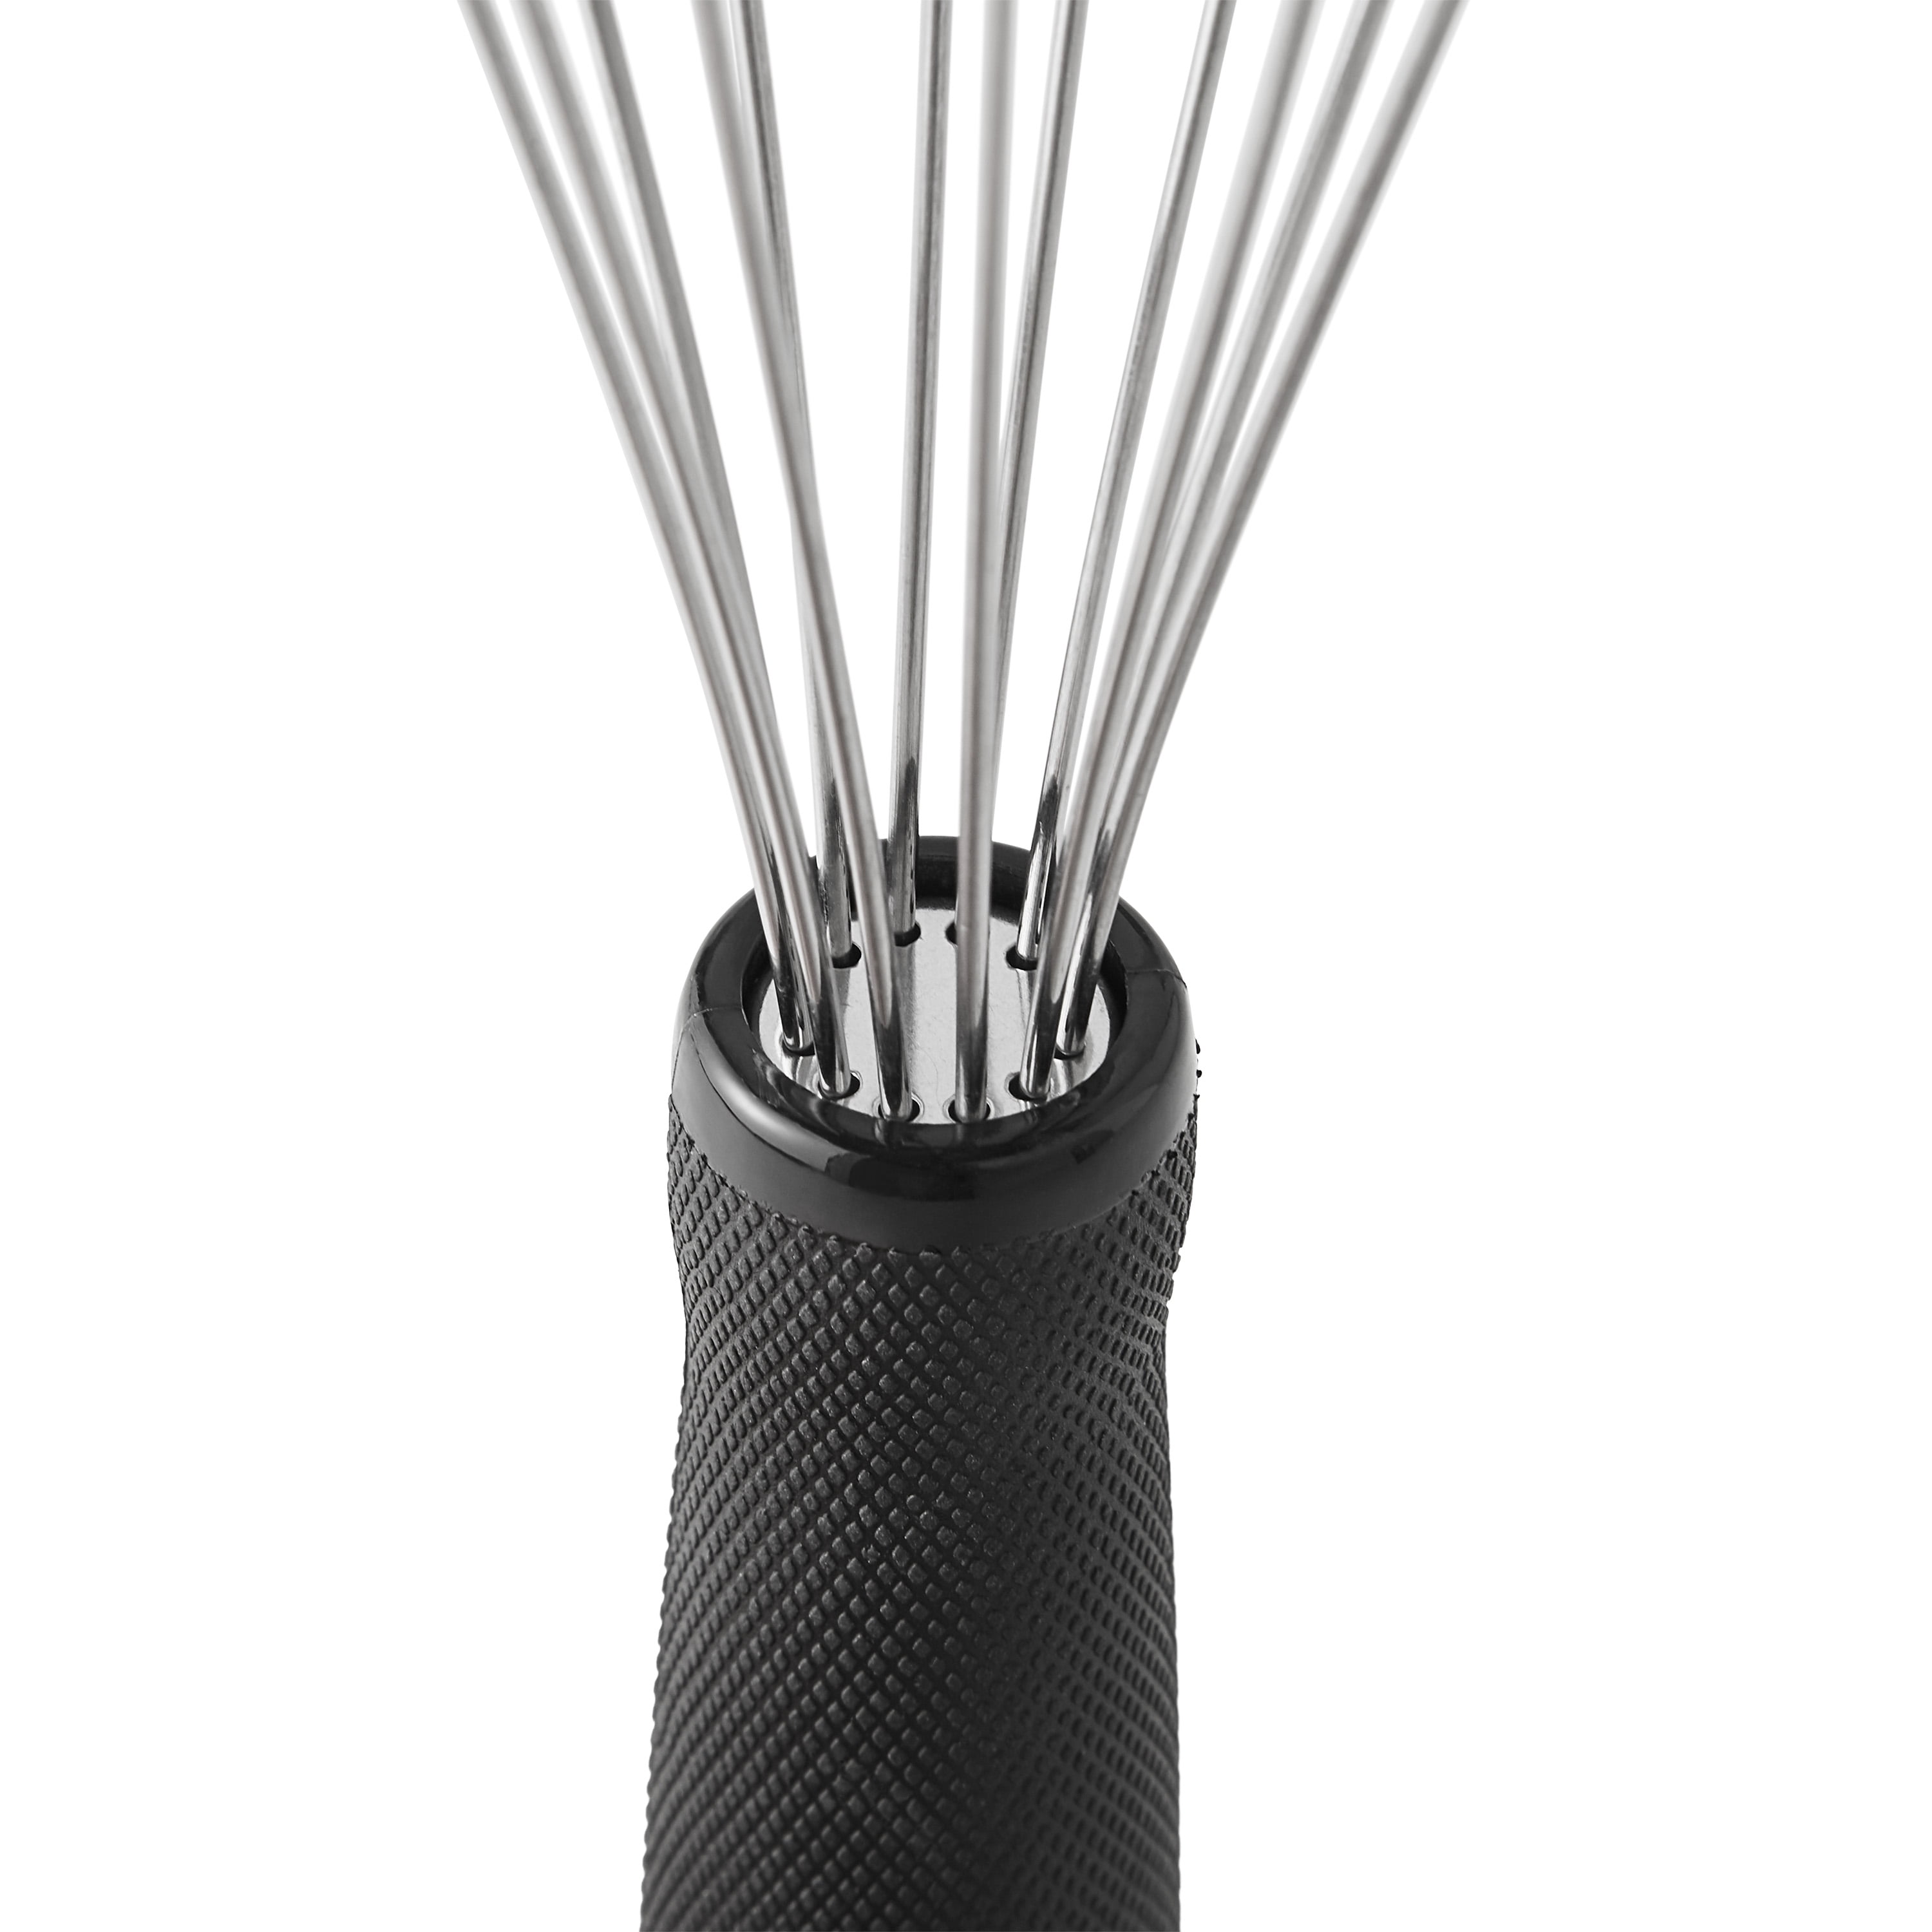 US$ 7.98 - Handheld Balloon Wire Kitchen Whisk Stainless Steel